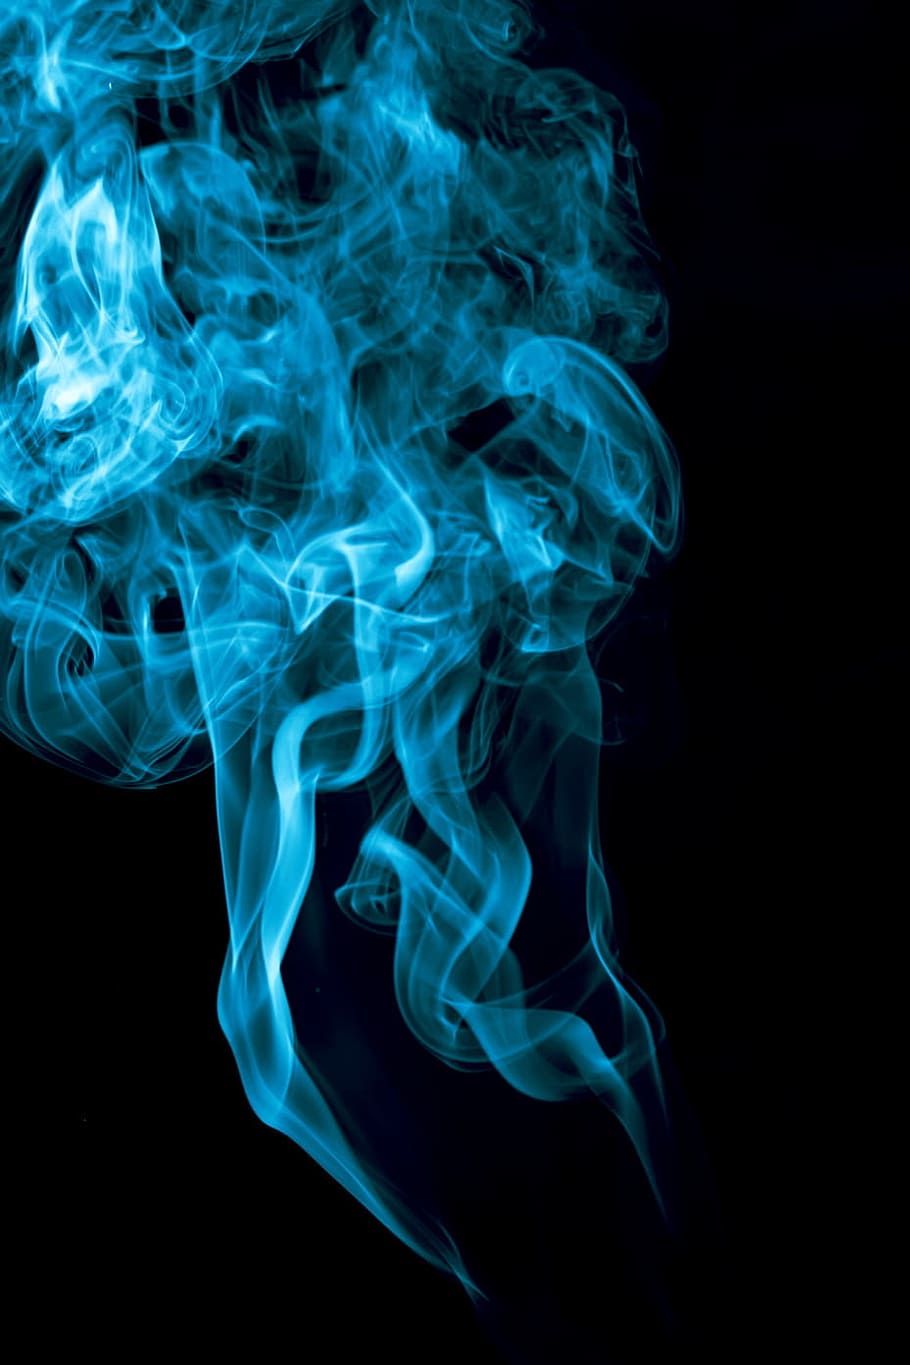 biru, latar belakang, asap, terisolasi, hitam, halus, bentuk, abstrak, gelombang, wangi